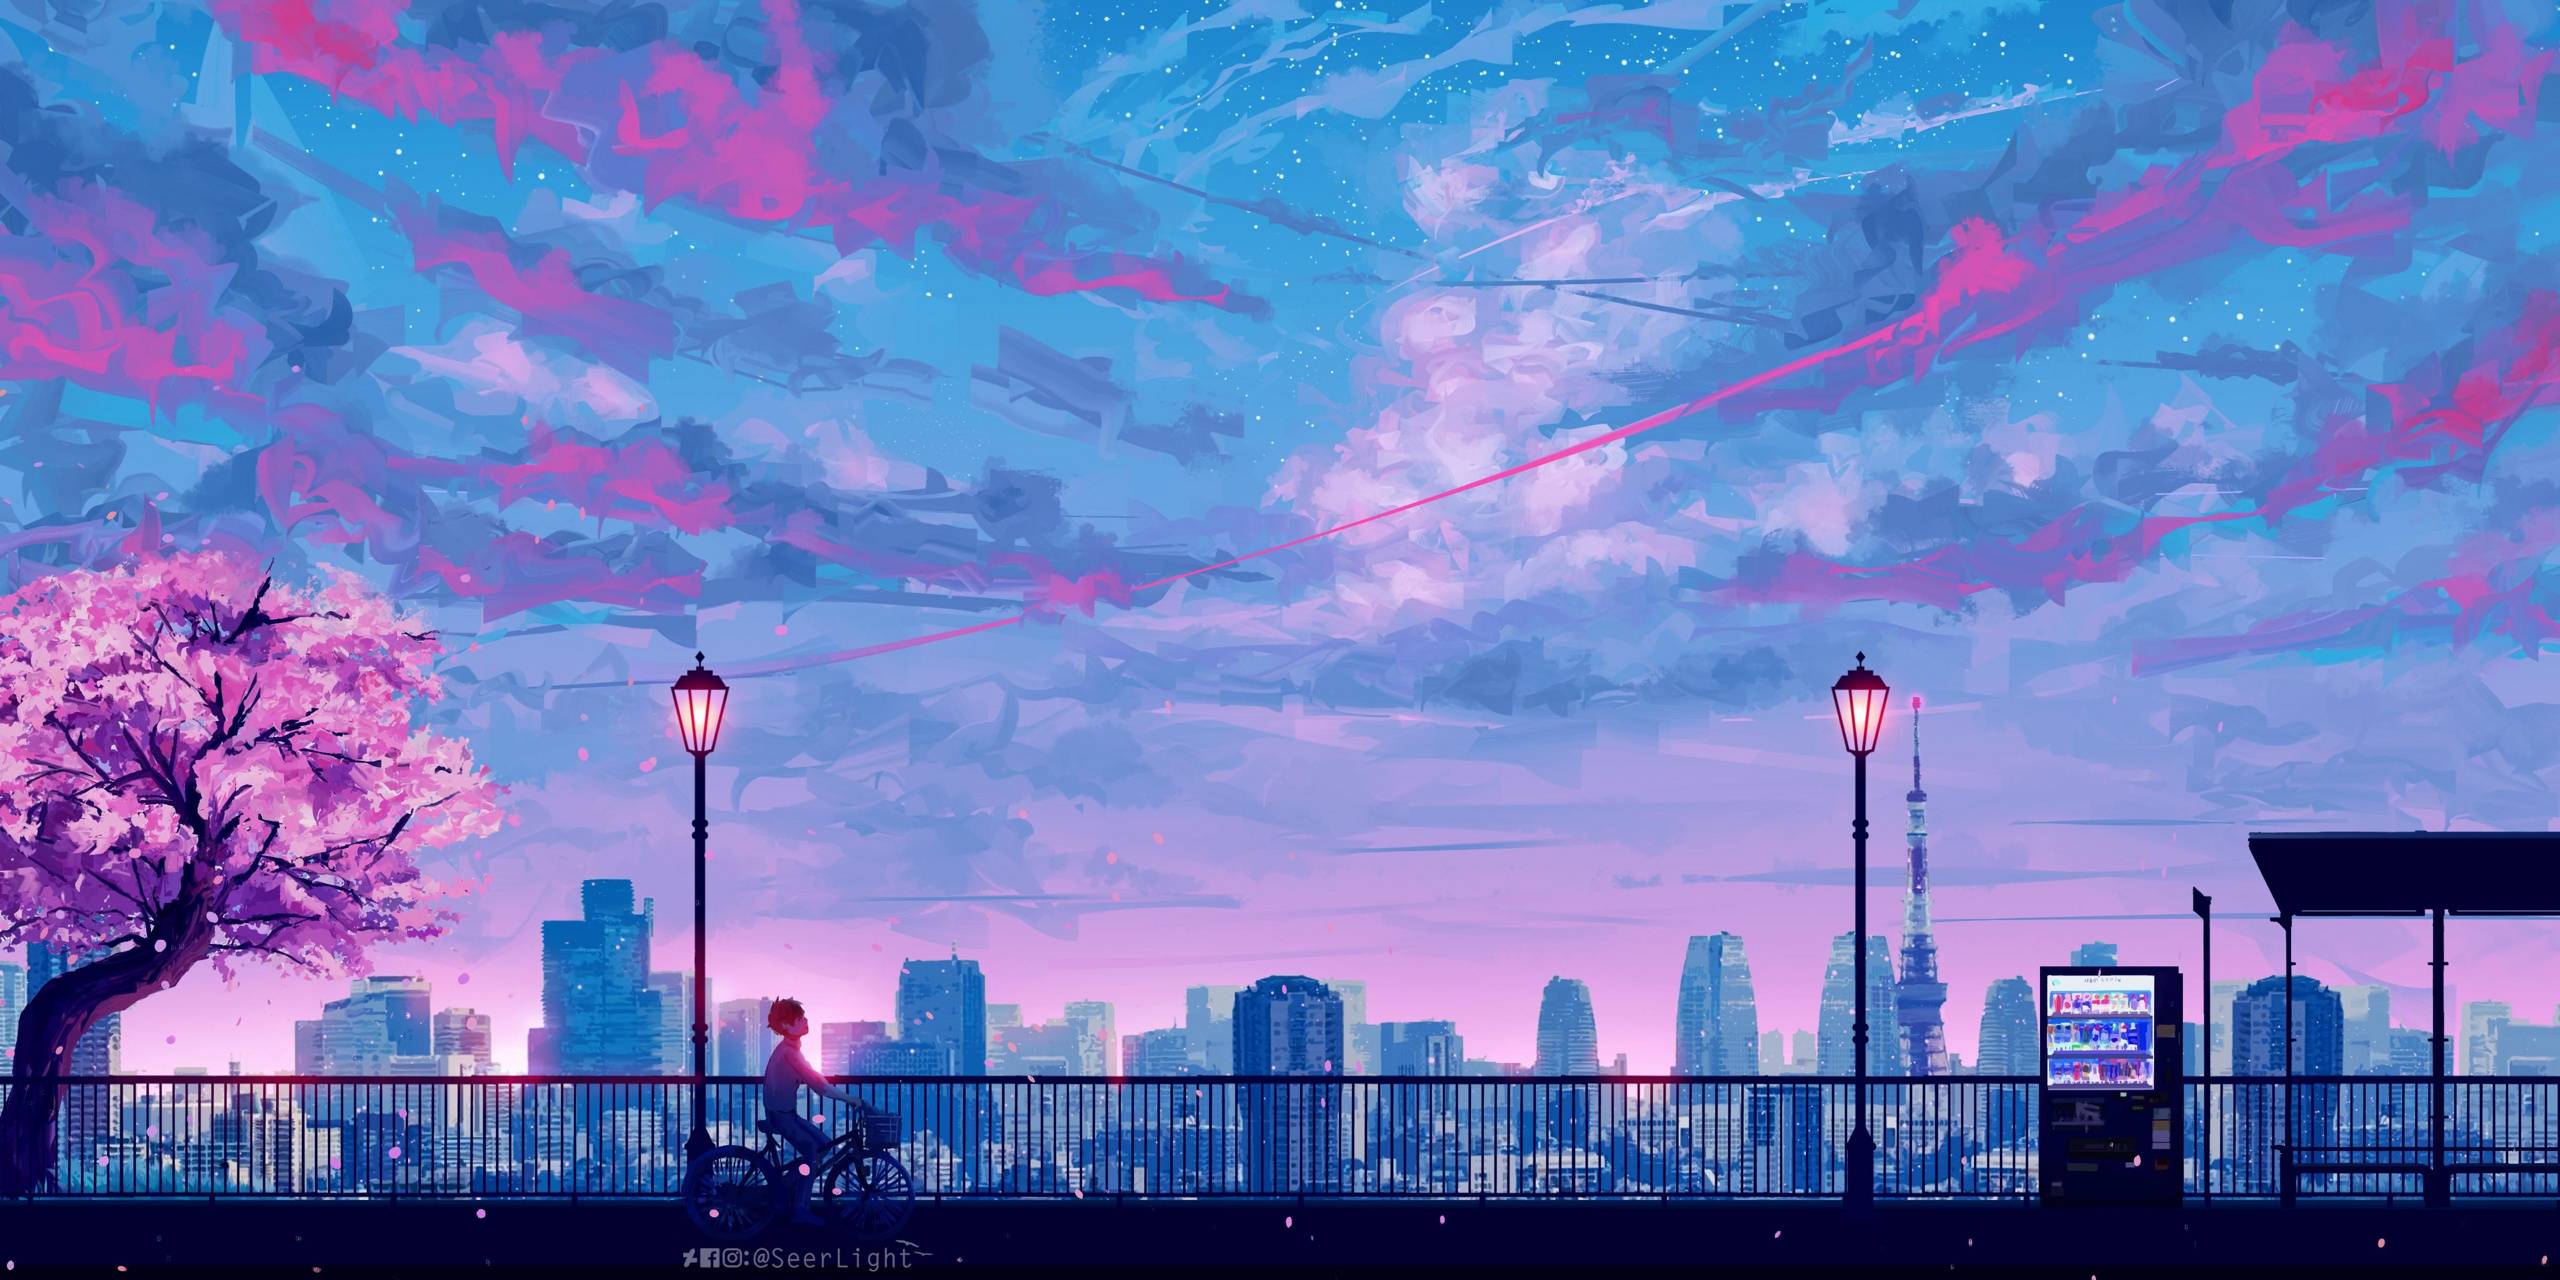 1AM Study Session  Chill beatsLofi Hiphop Mix  Aesthetic anime Anime  scenery wallpaper Anime